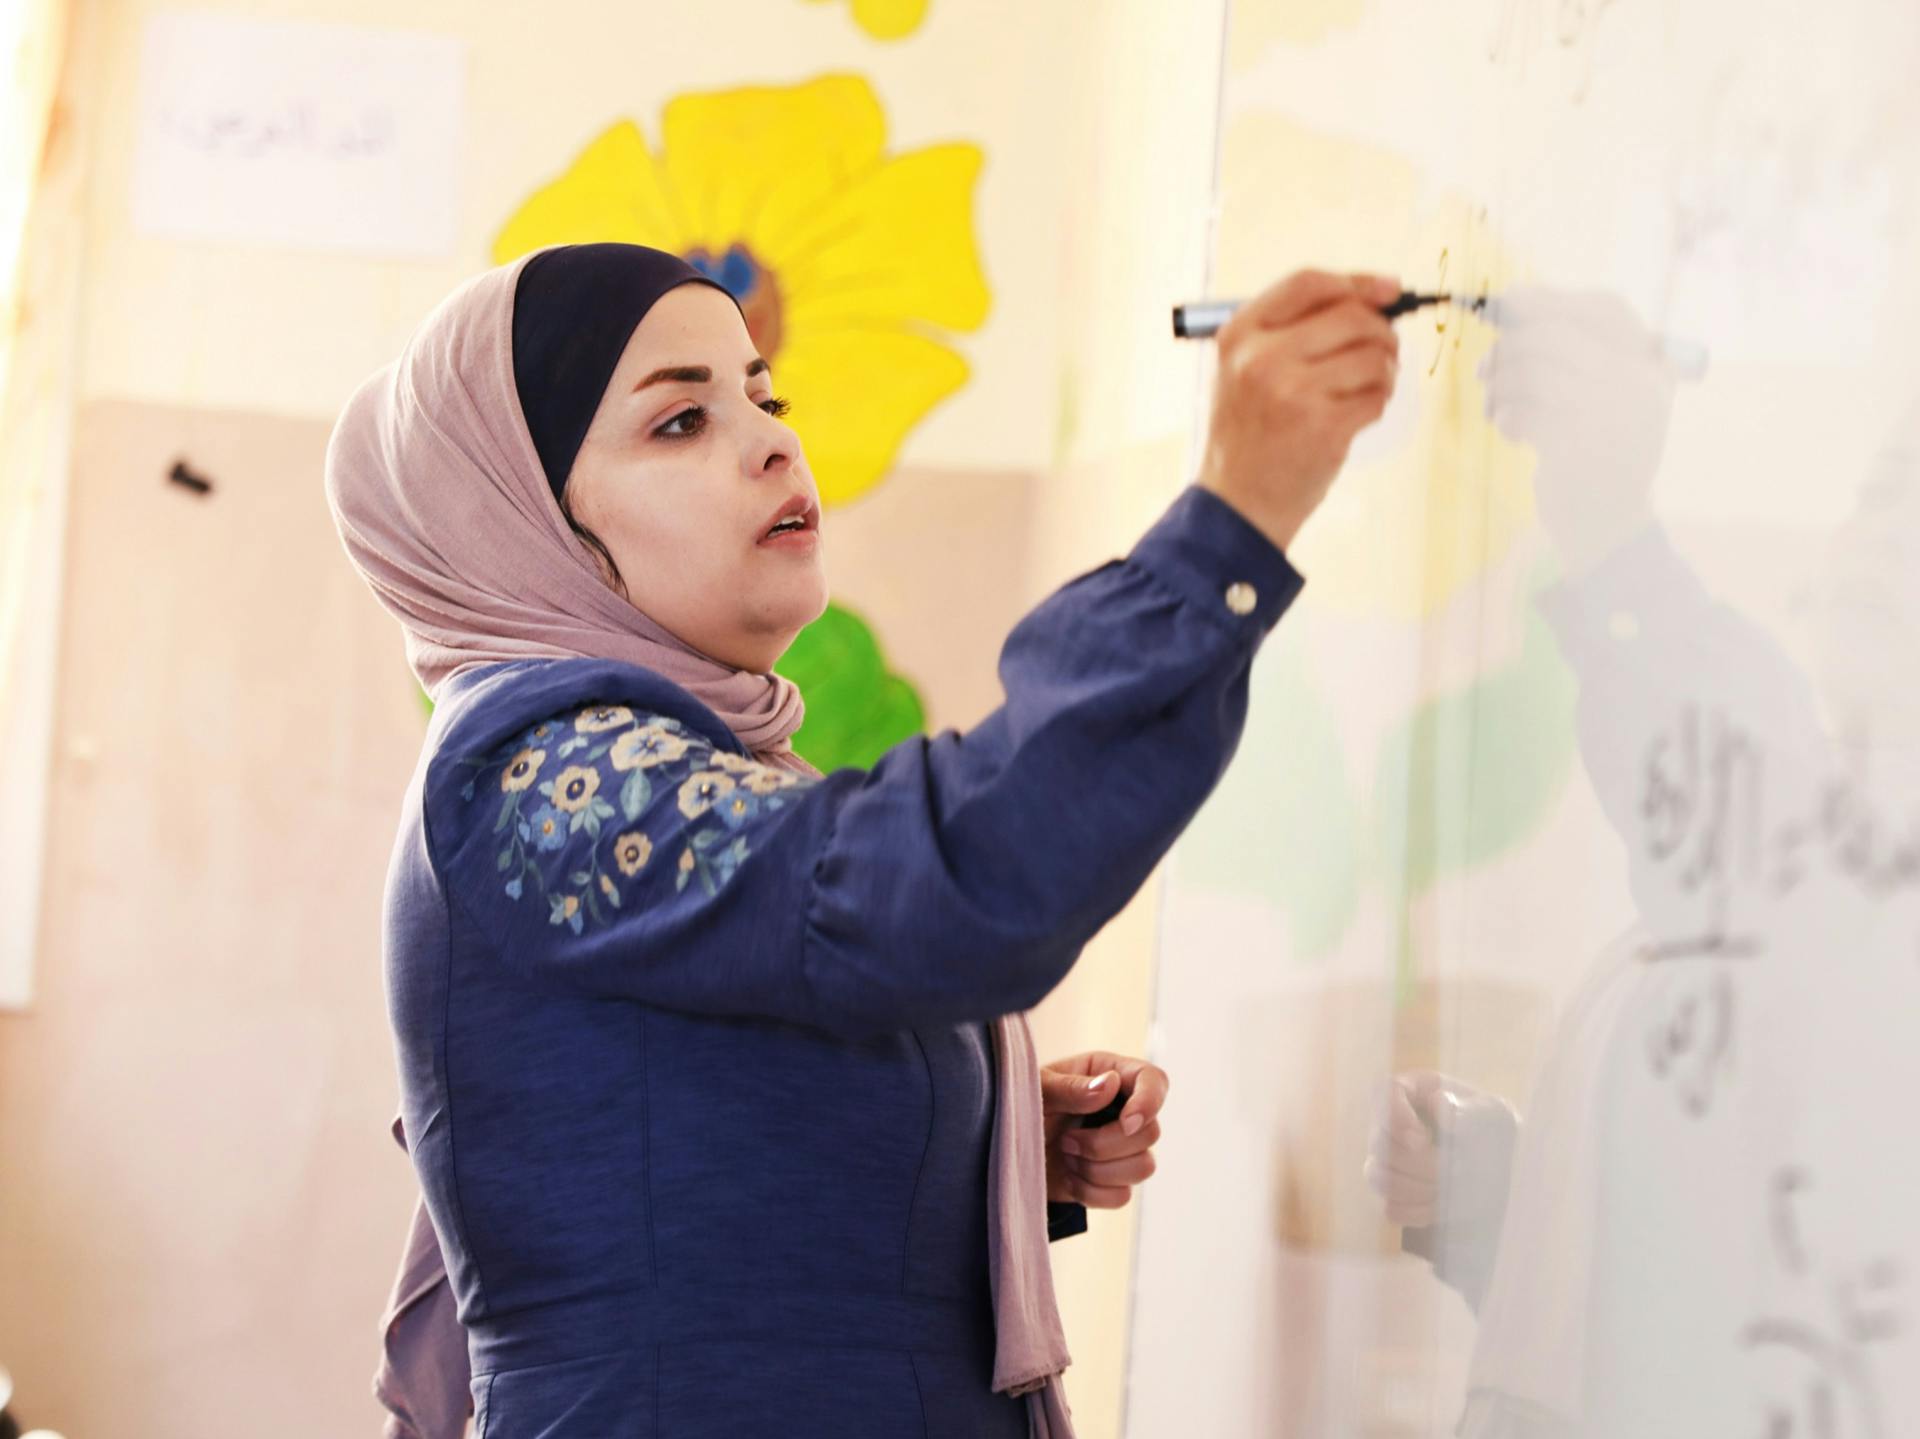 A woman wearing a hijab writing on a white board.